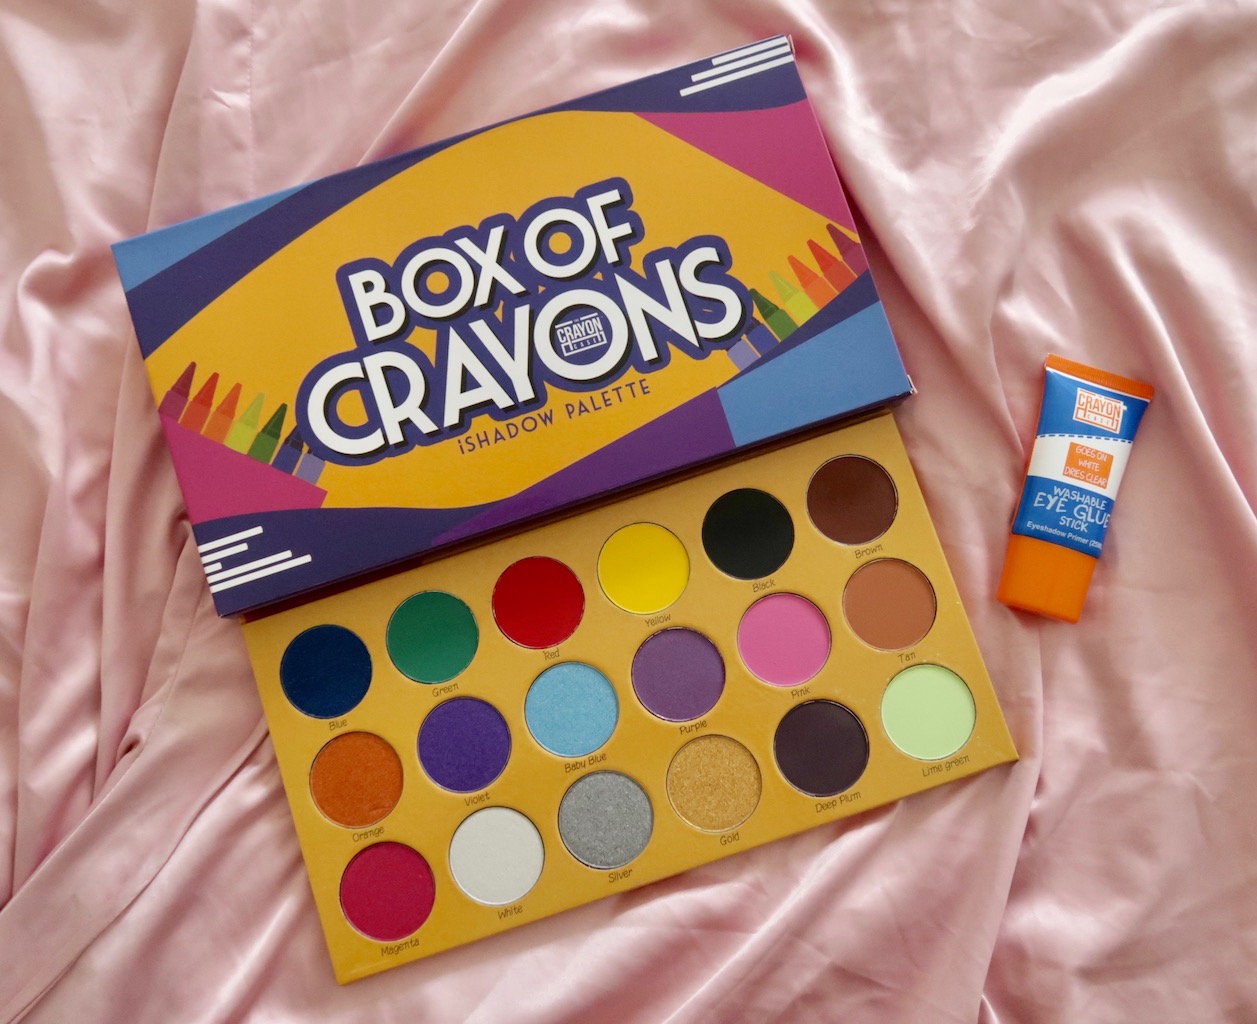 Box Crayons Eyeshadow Palette Washable Eye Glue Stick Primer: sensation eye makeup products!